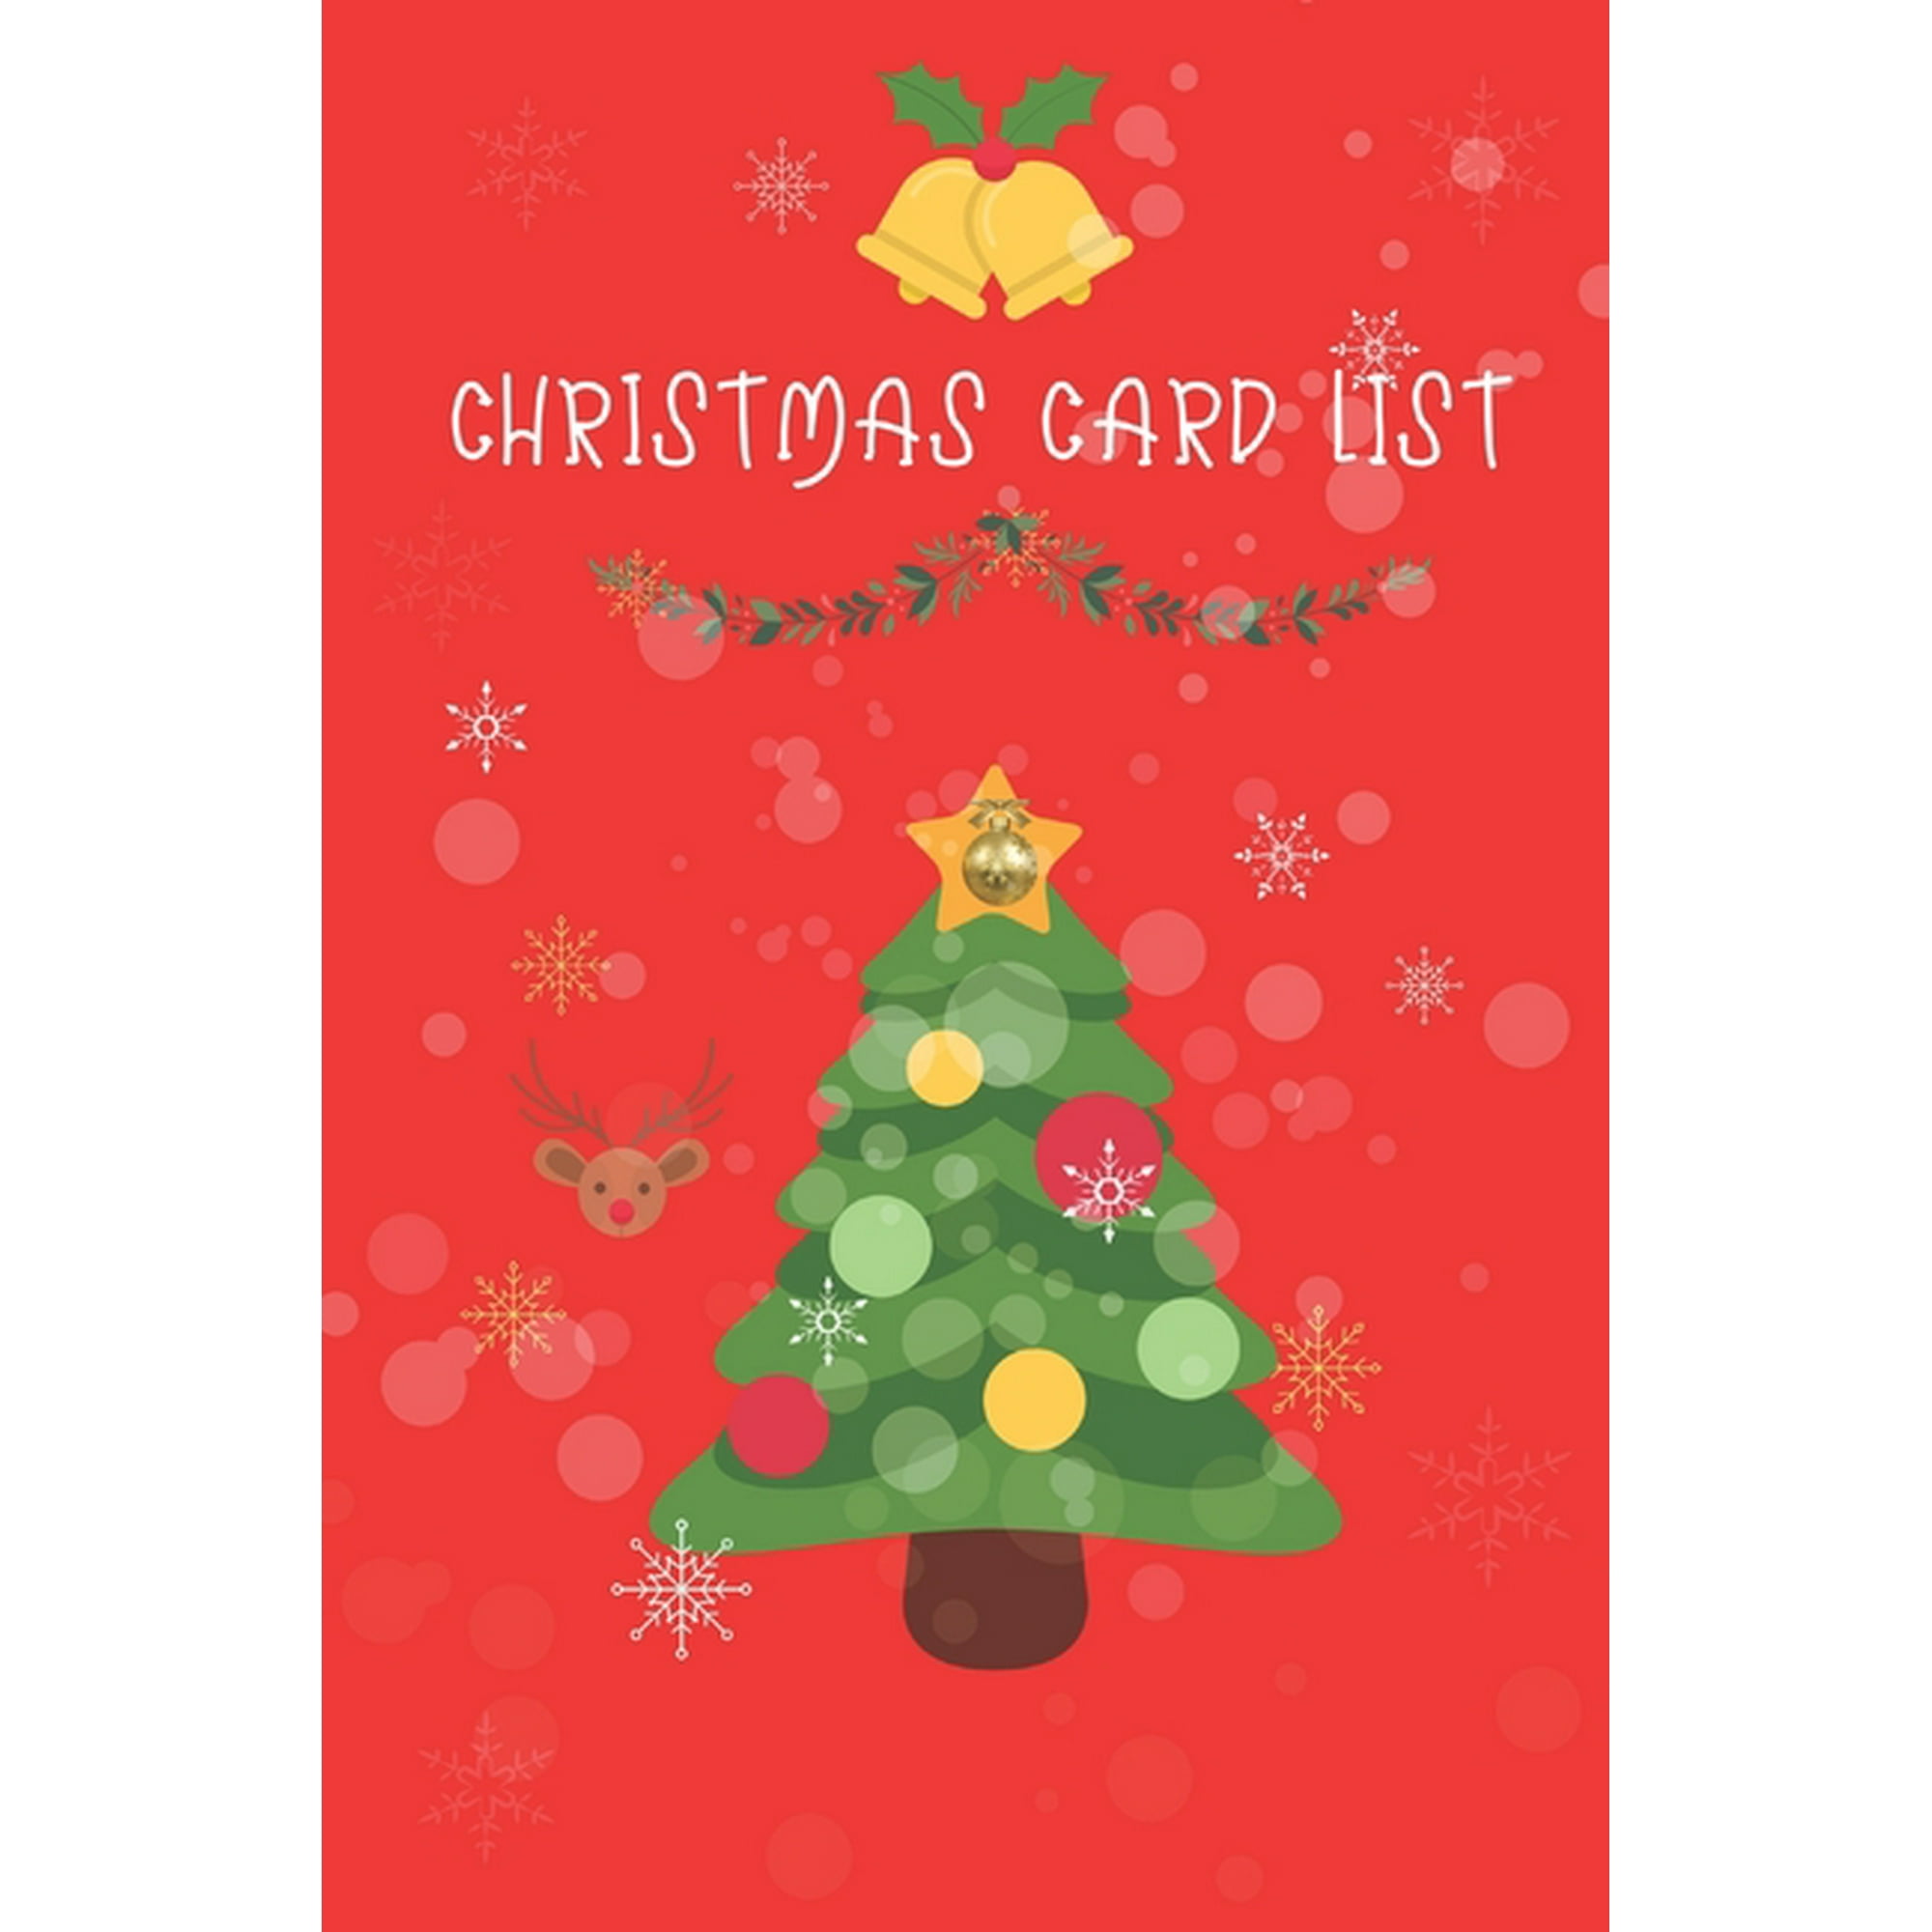 Christmas Card List : address book and tracker for the Christmas ...